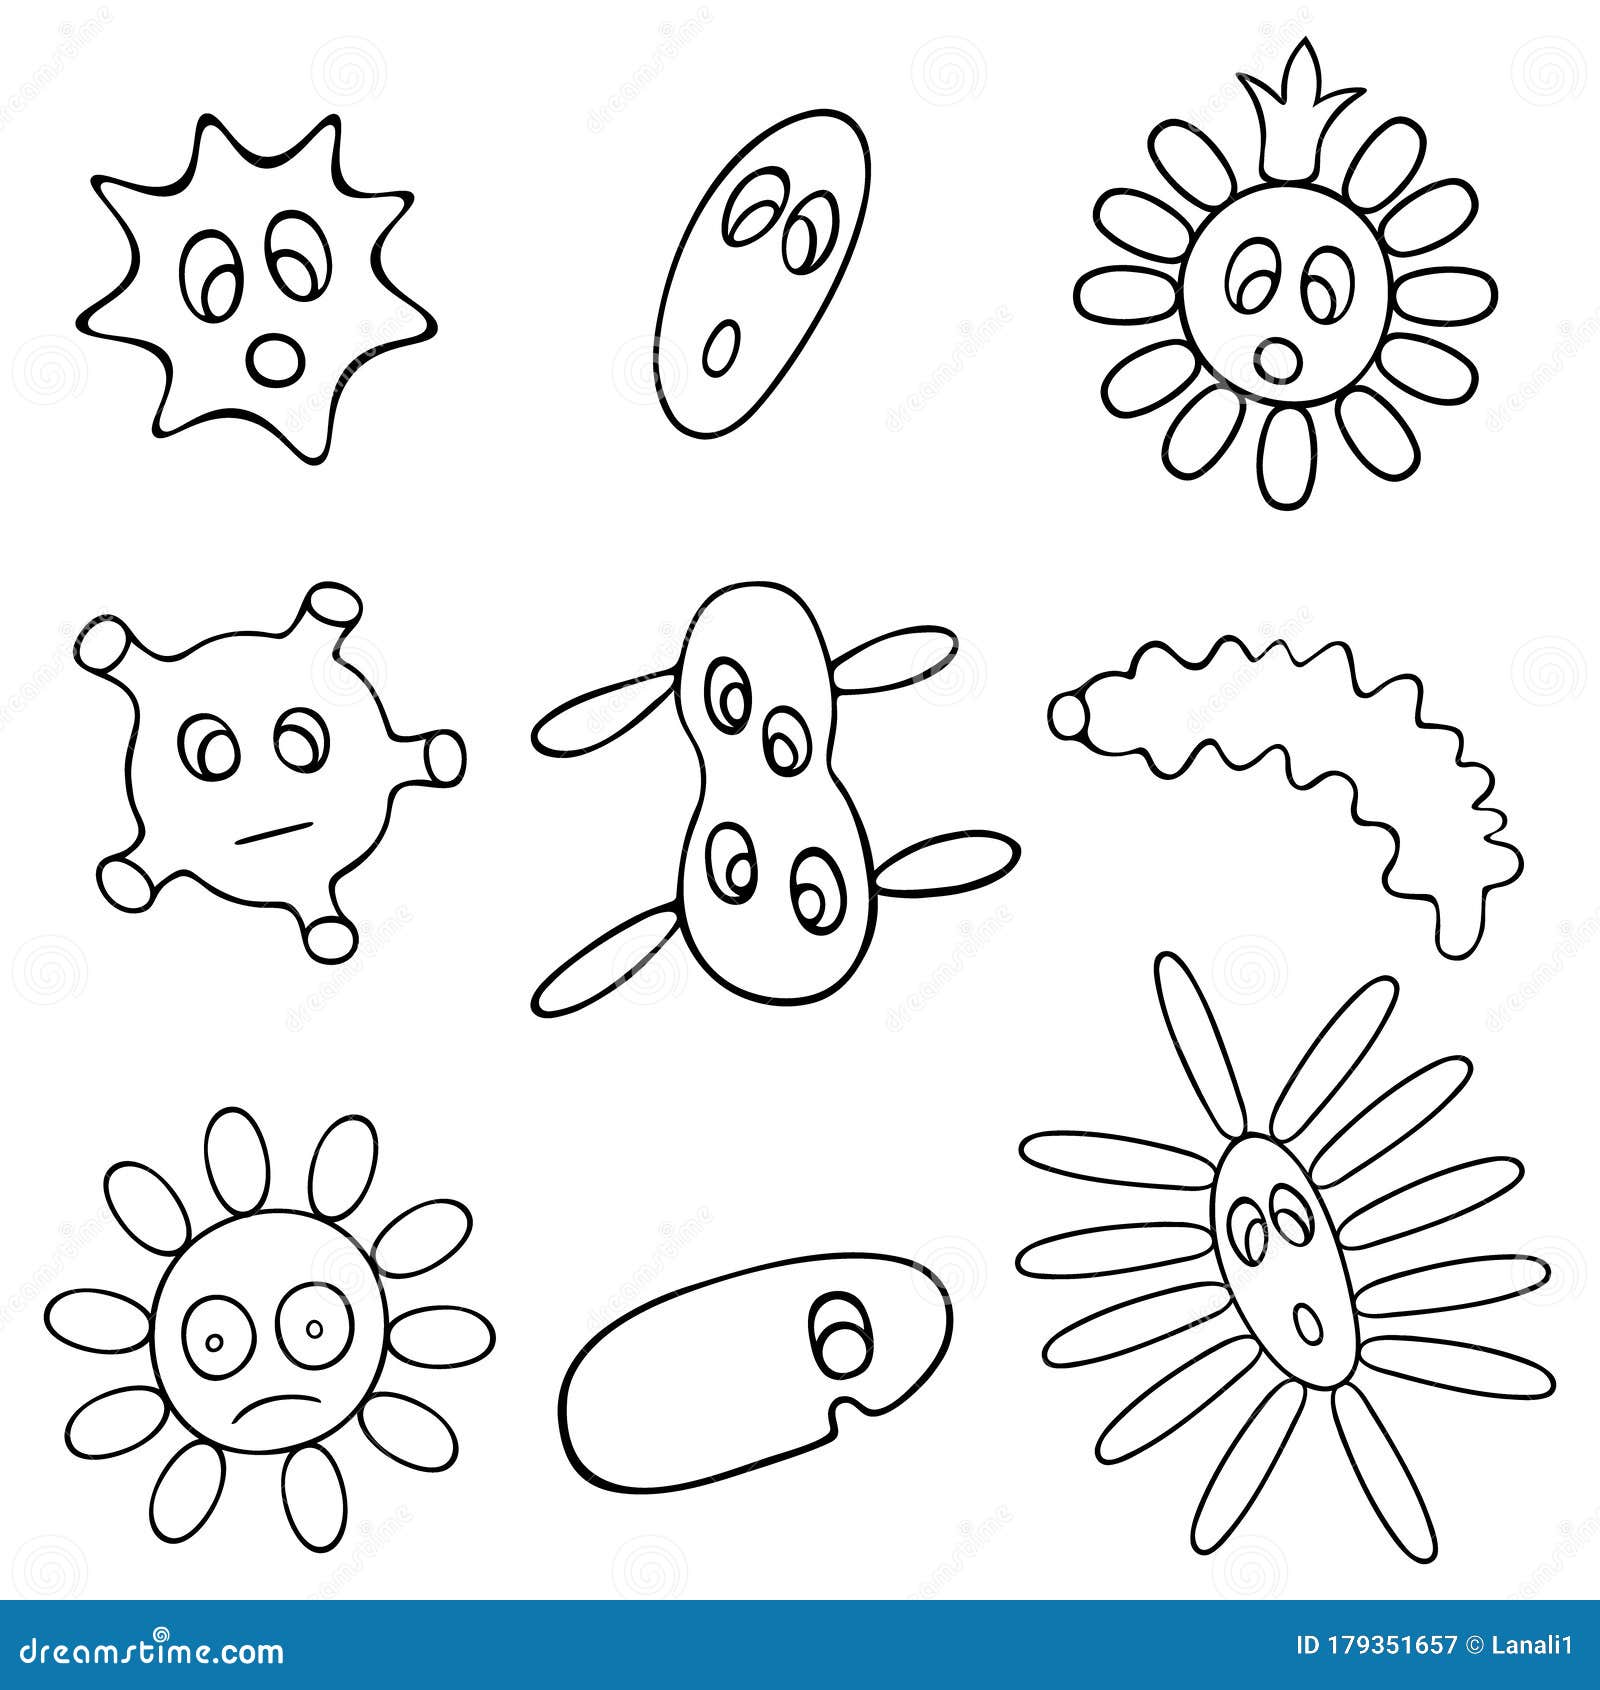 Bacteria Cartoon Coloring Page